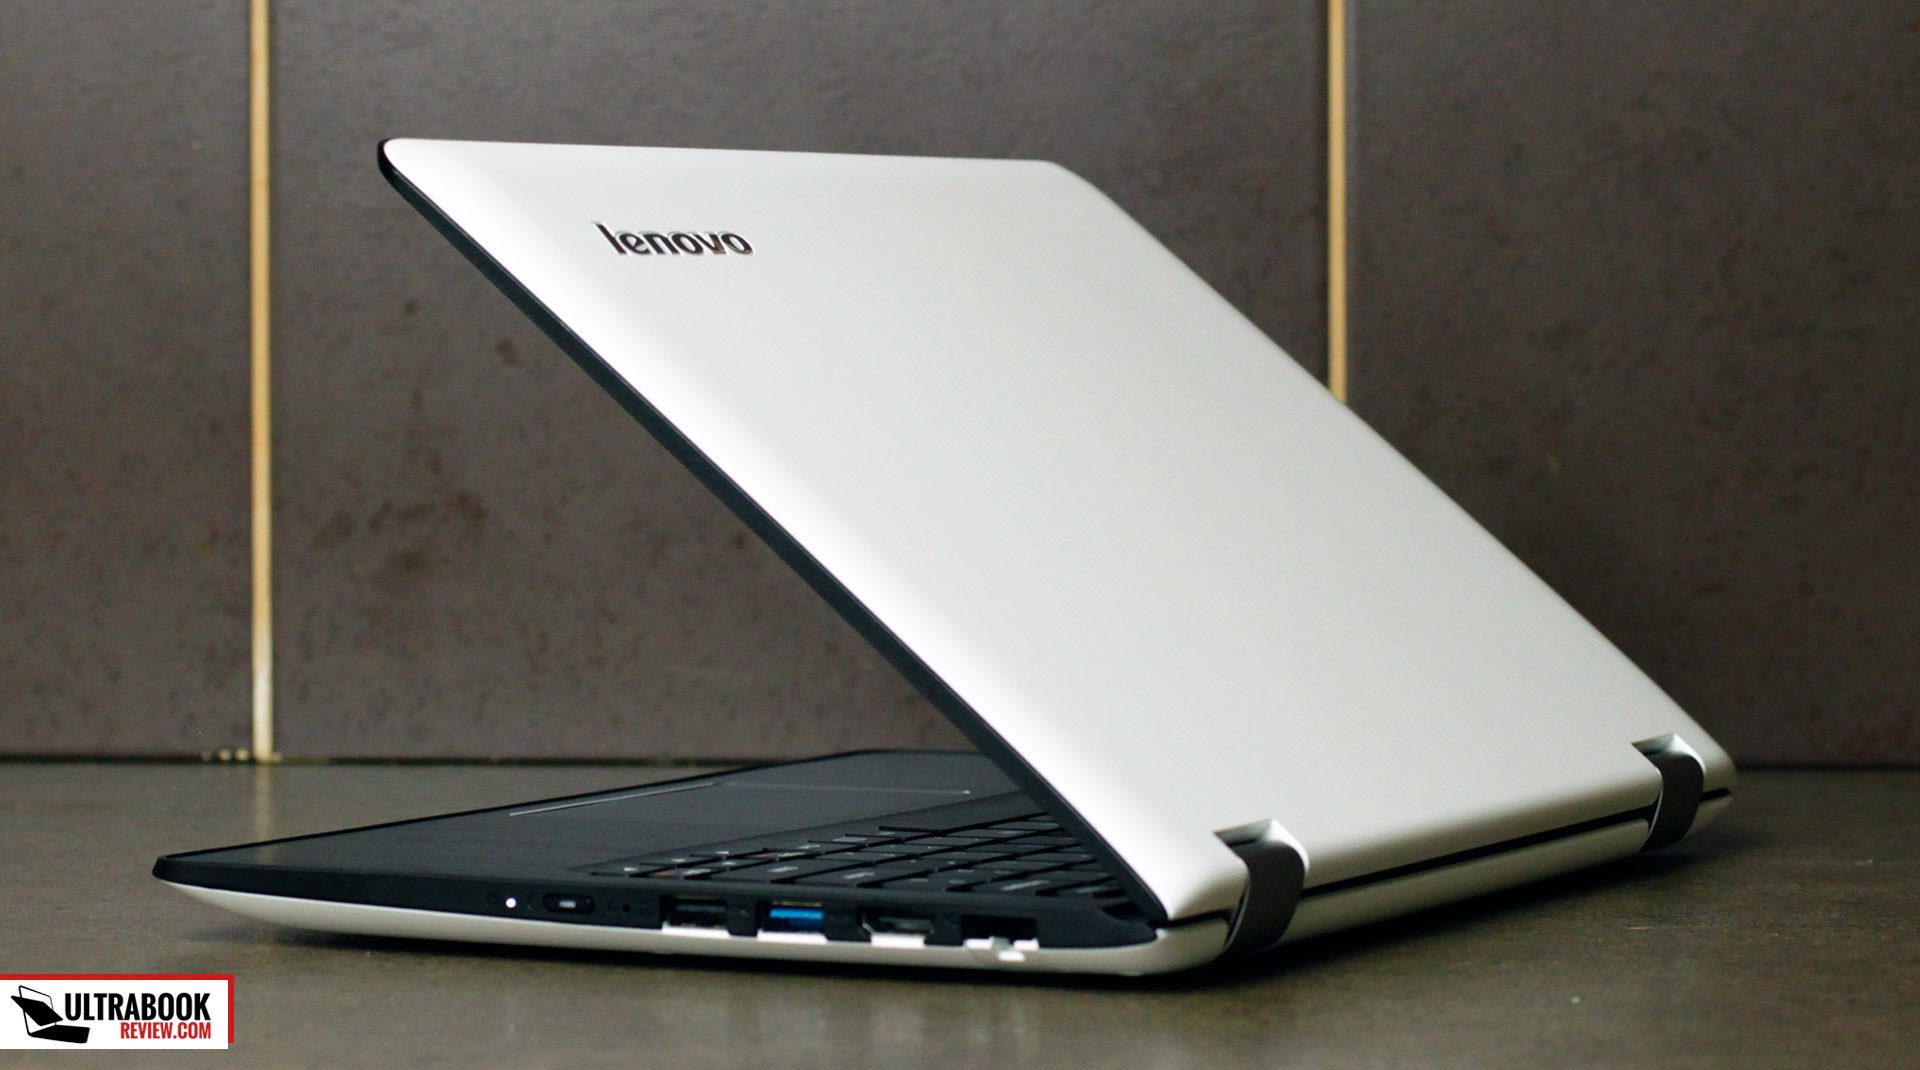 Lenovo Yoga 300 11 (Flex 3 11) review - an affordable 11-inch hybrid